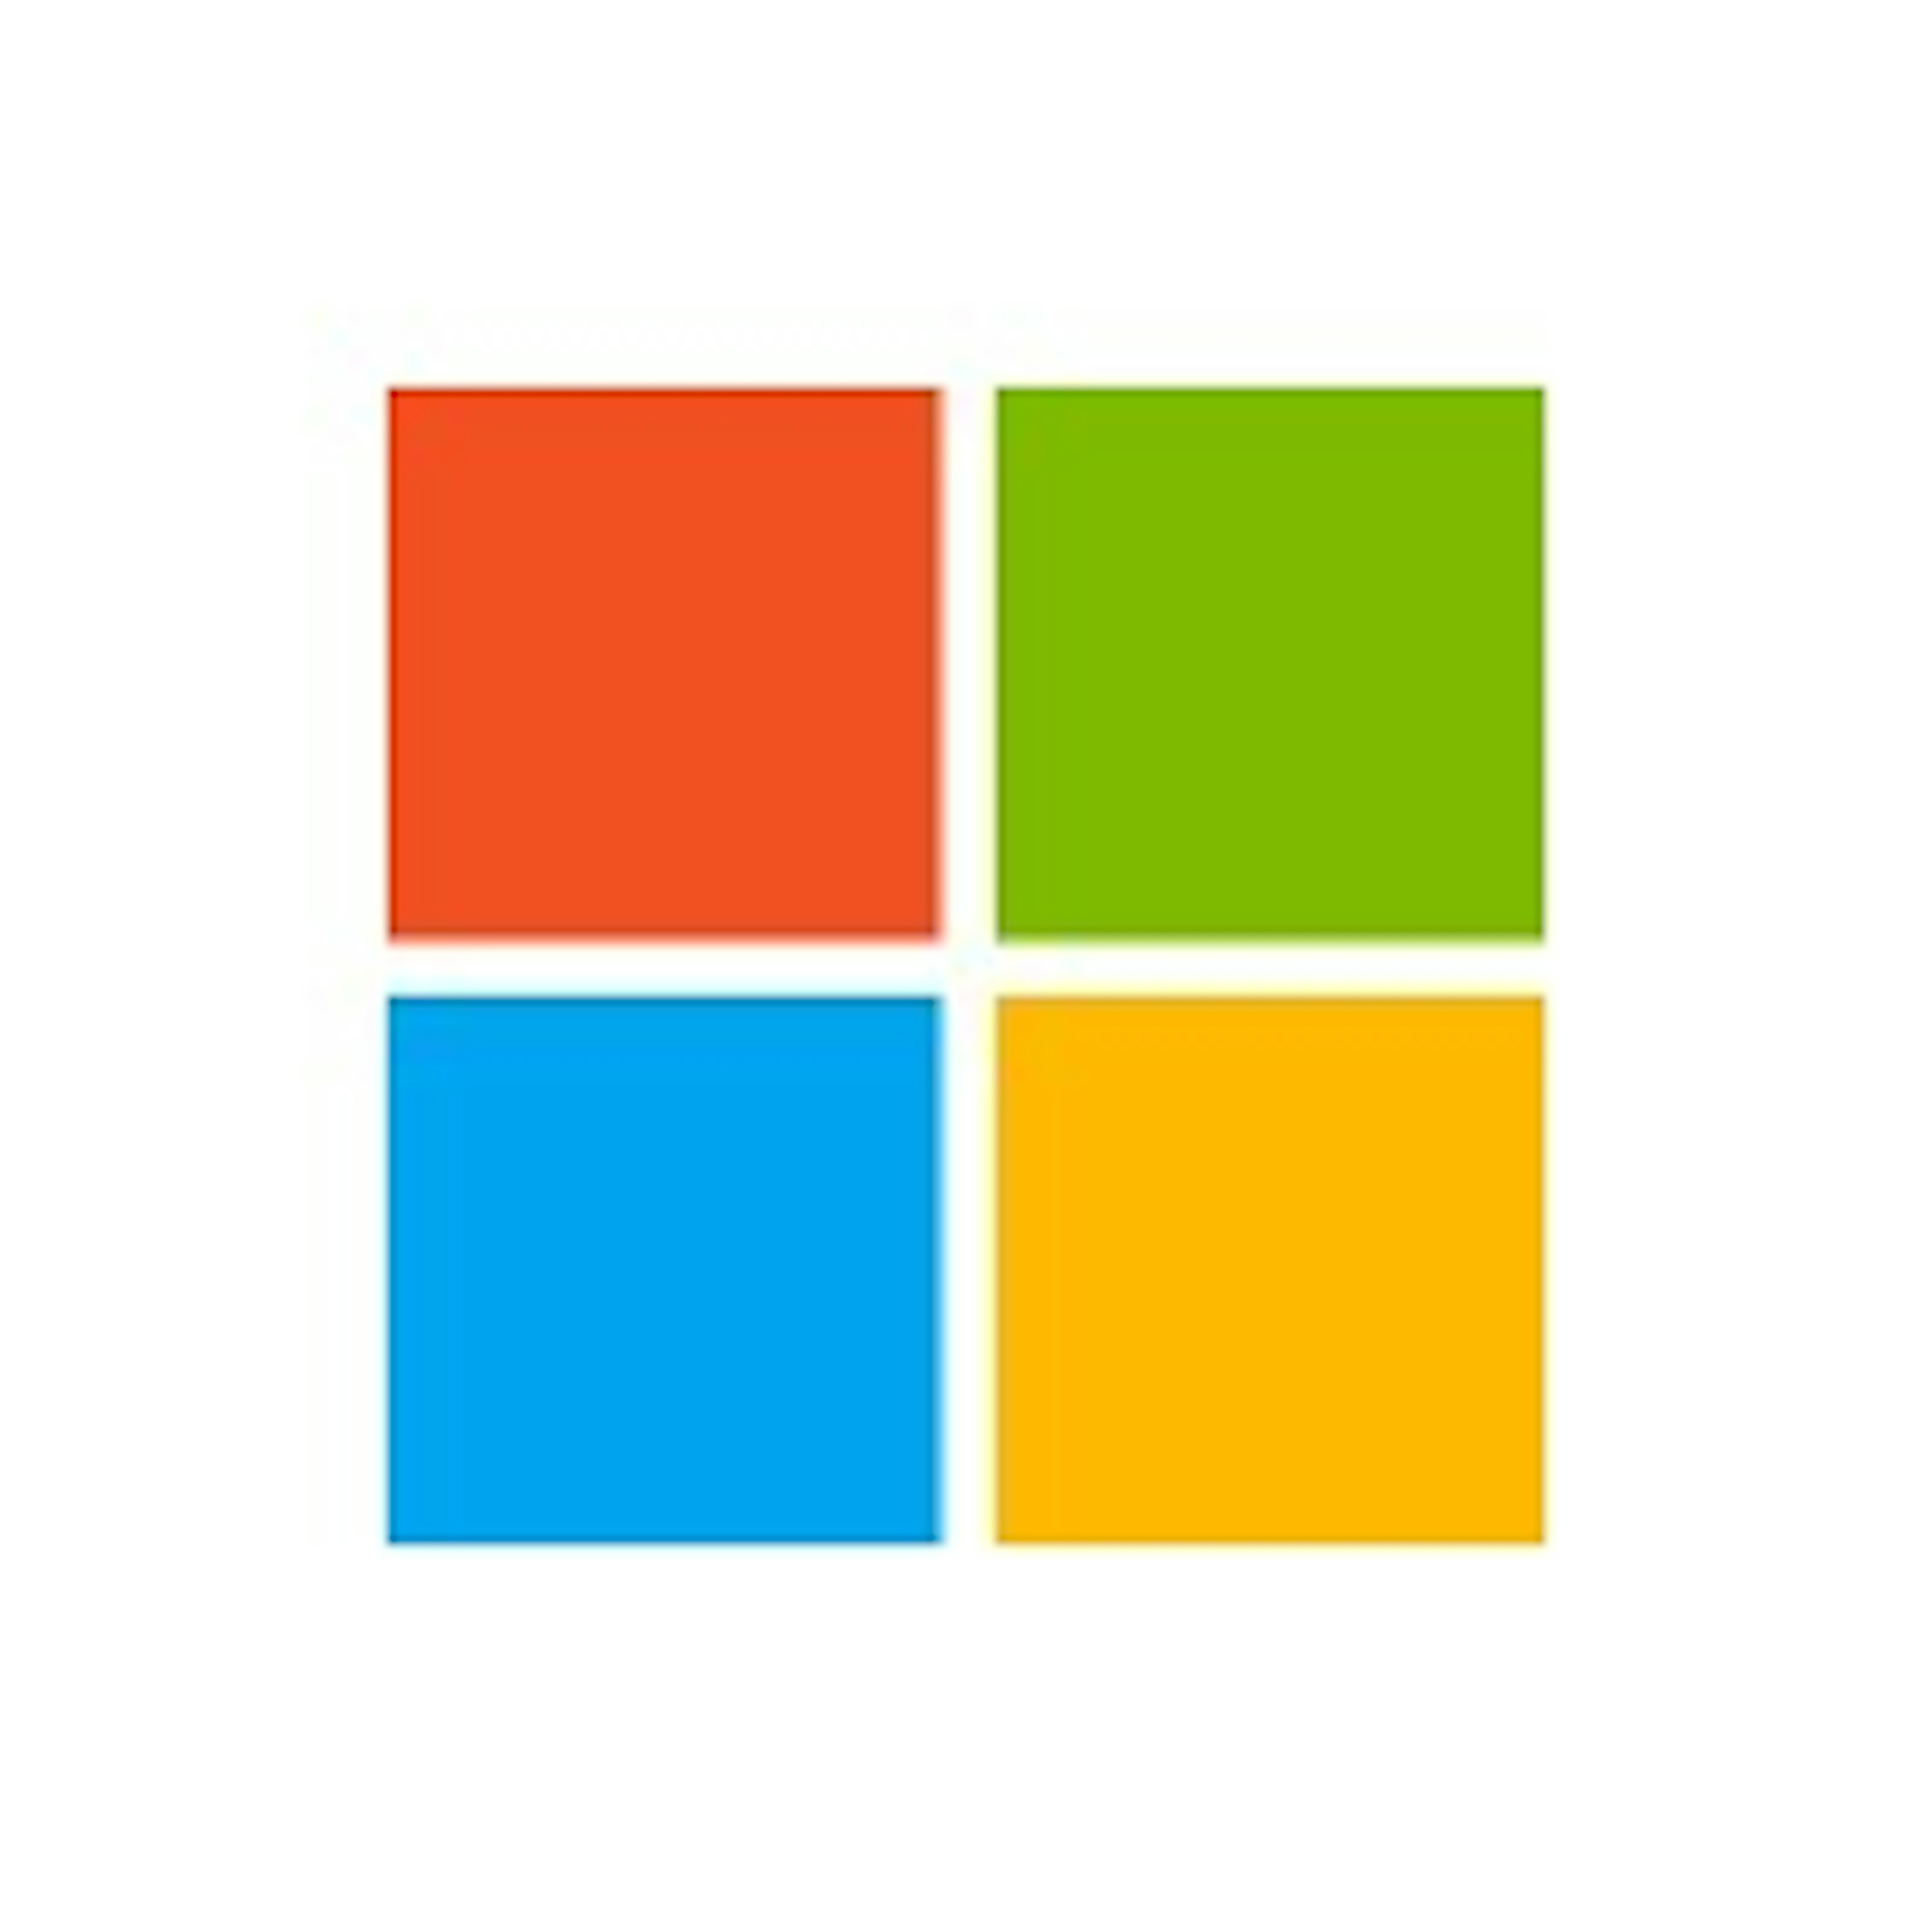 Microsoft Dynamics GP Logo